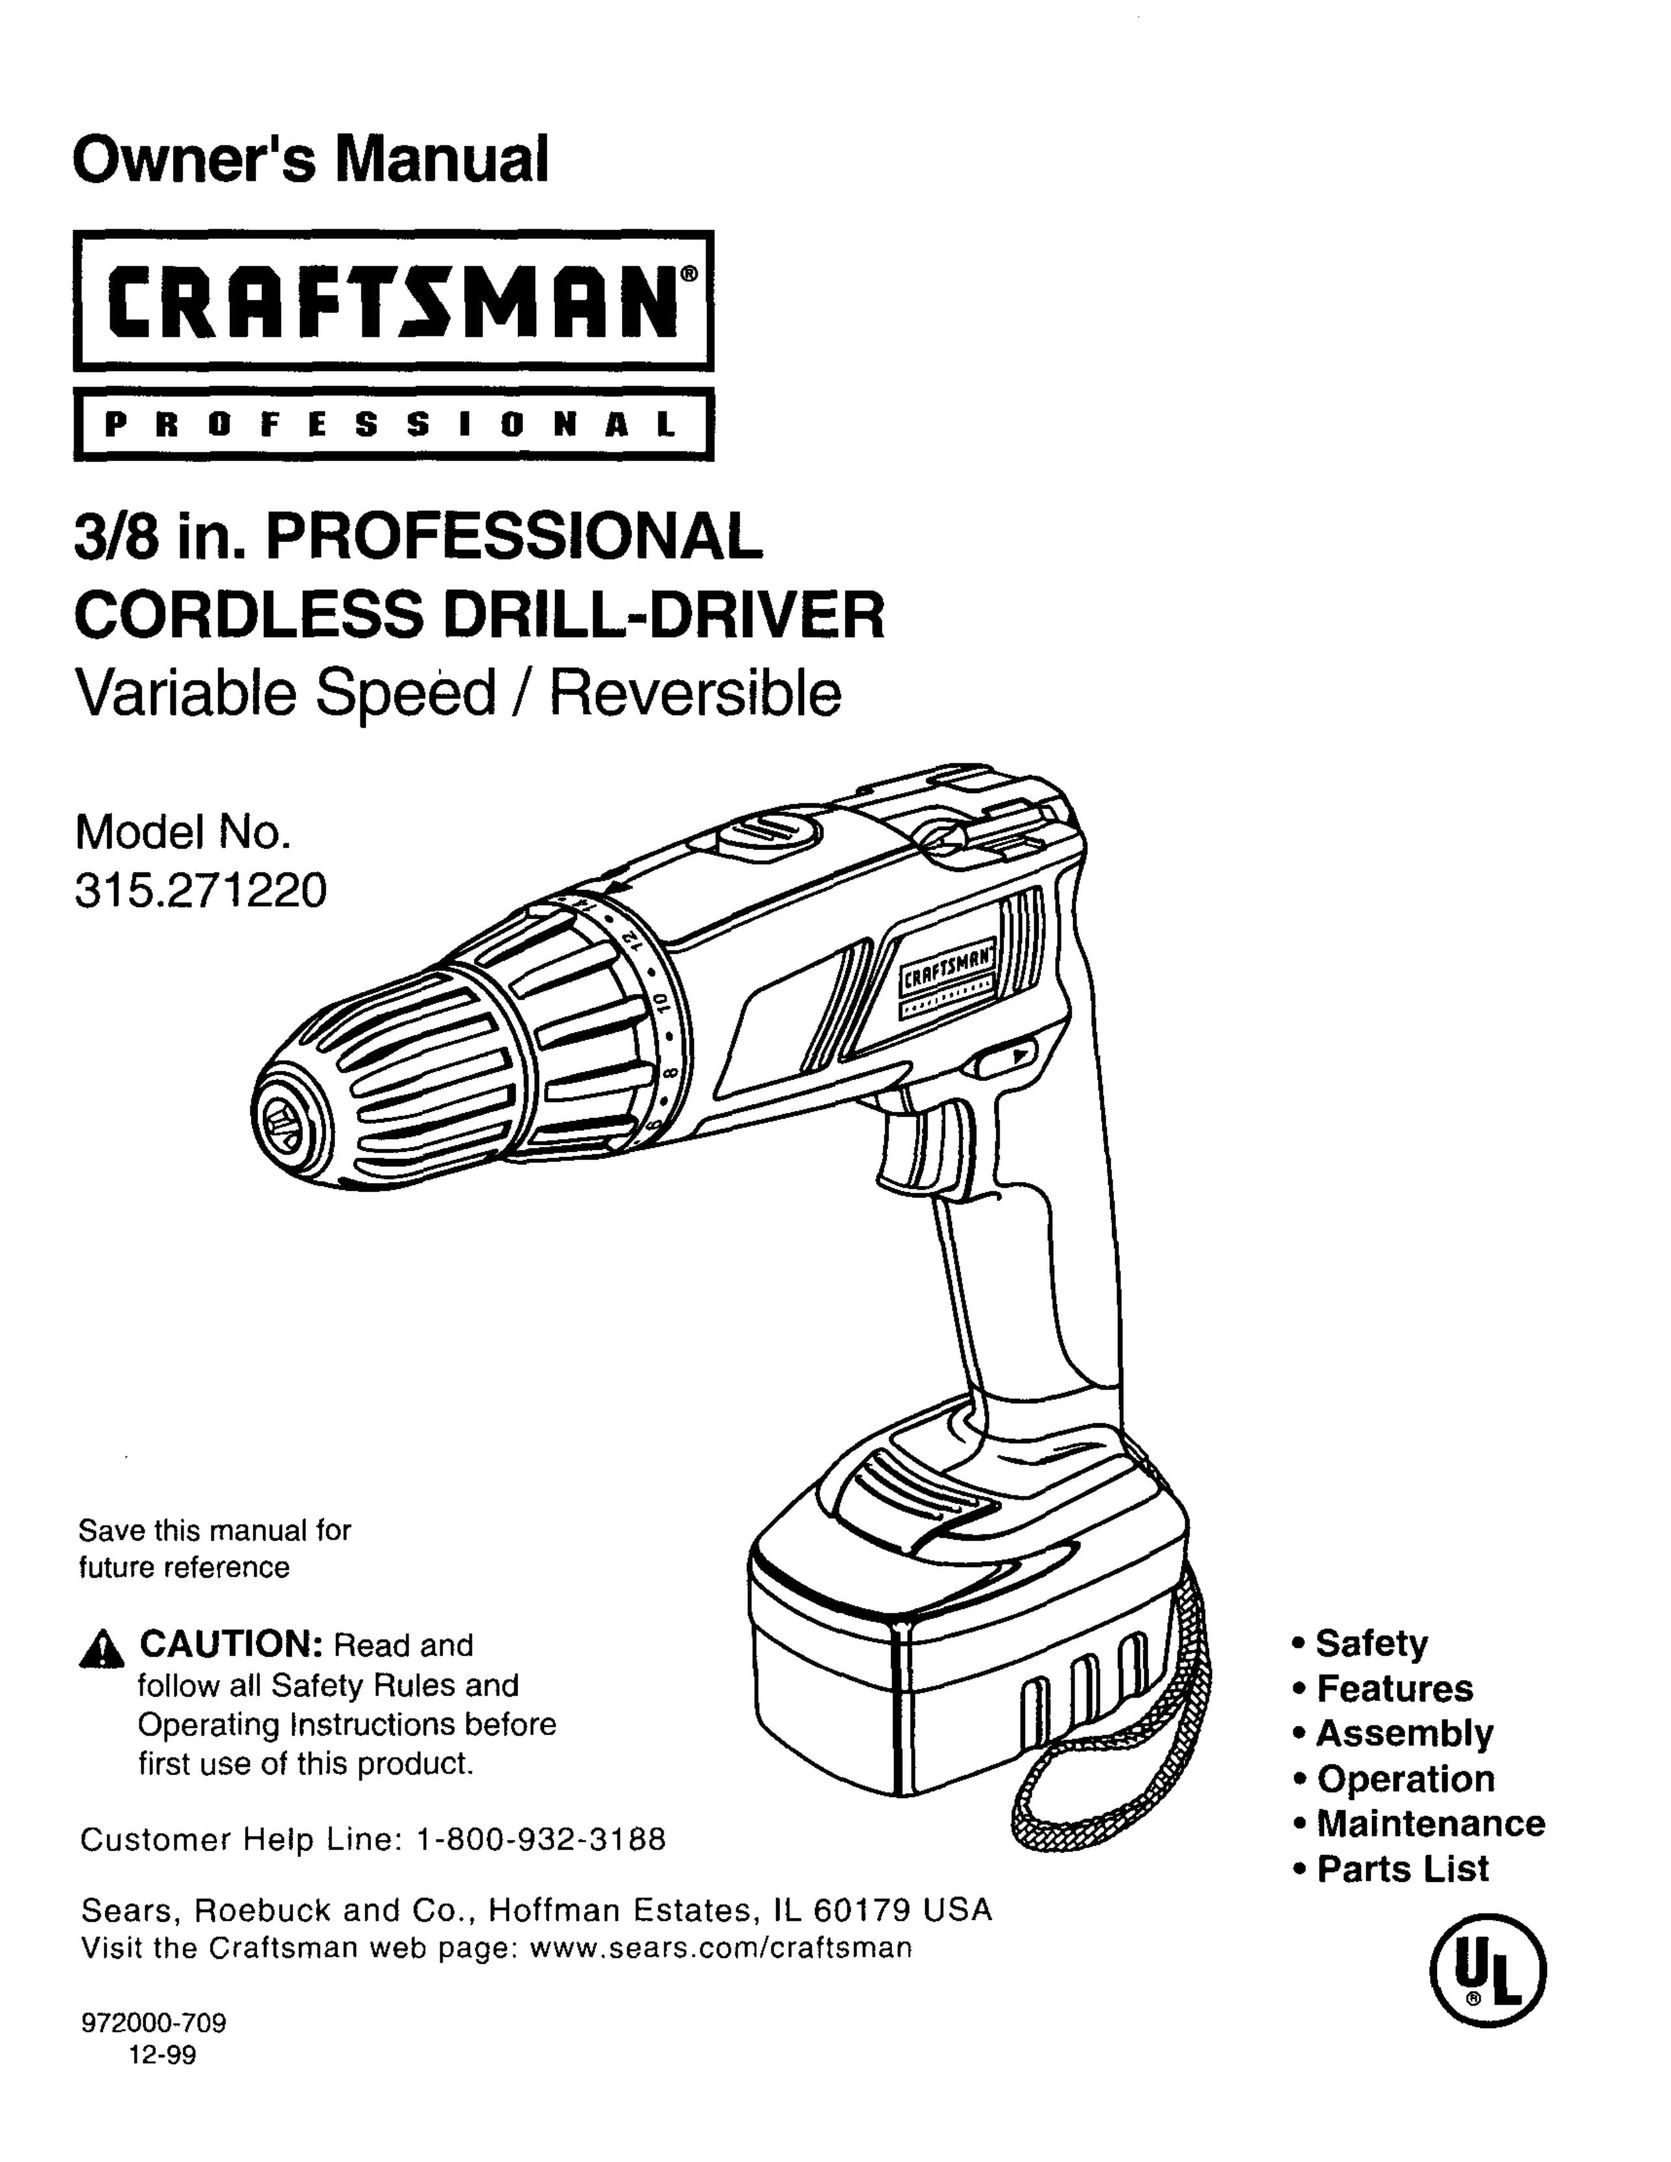 Craftsman 315.27122 Cordless Drill User Manual